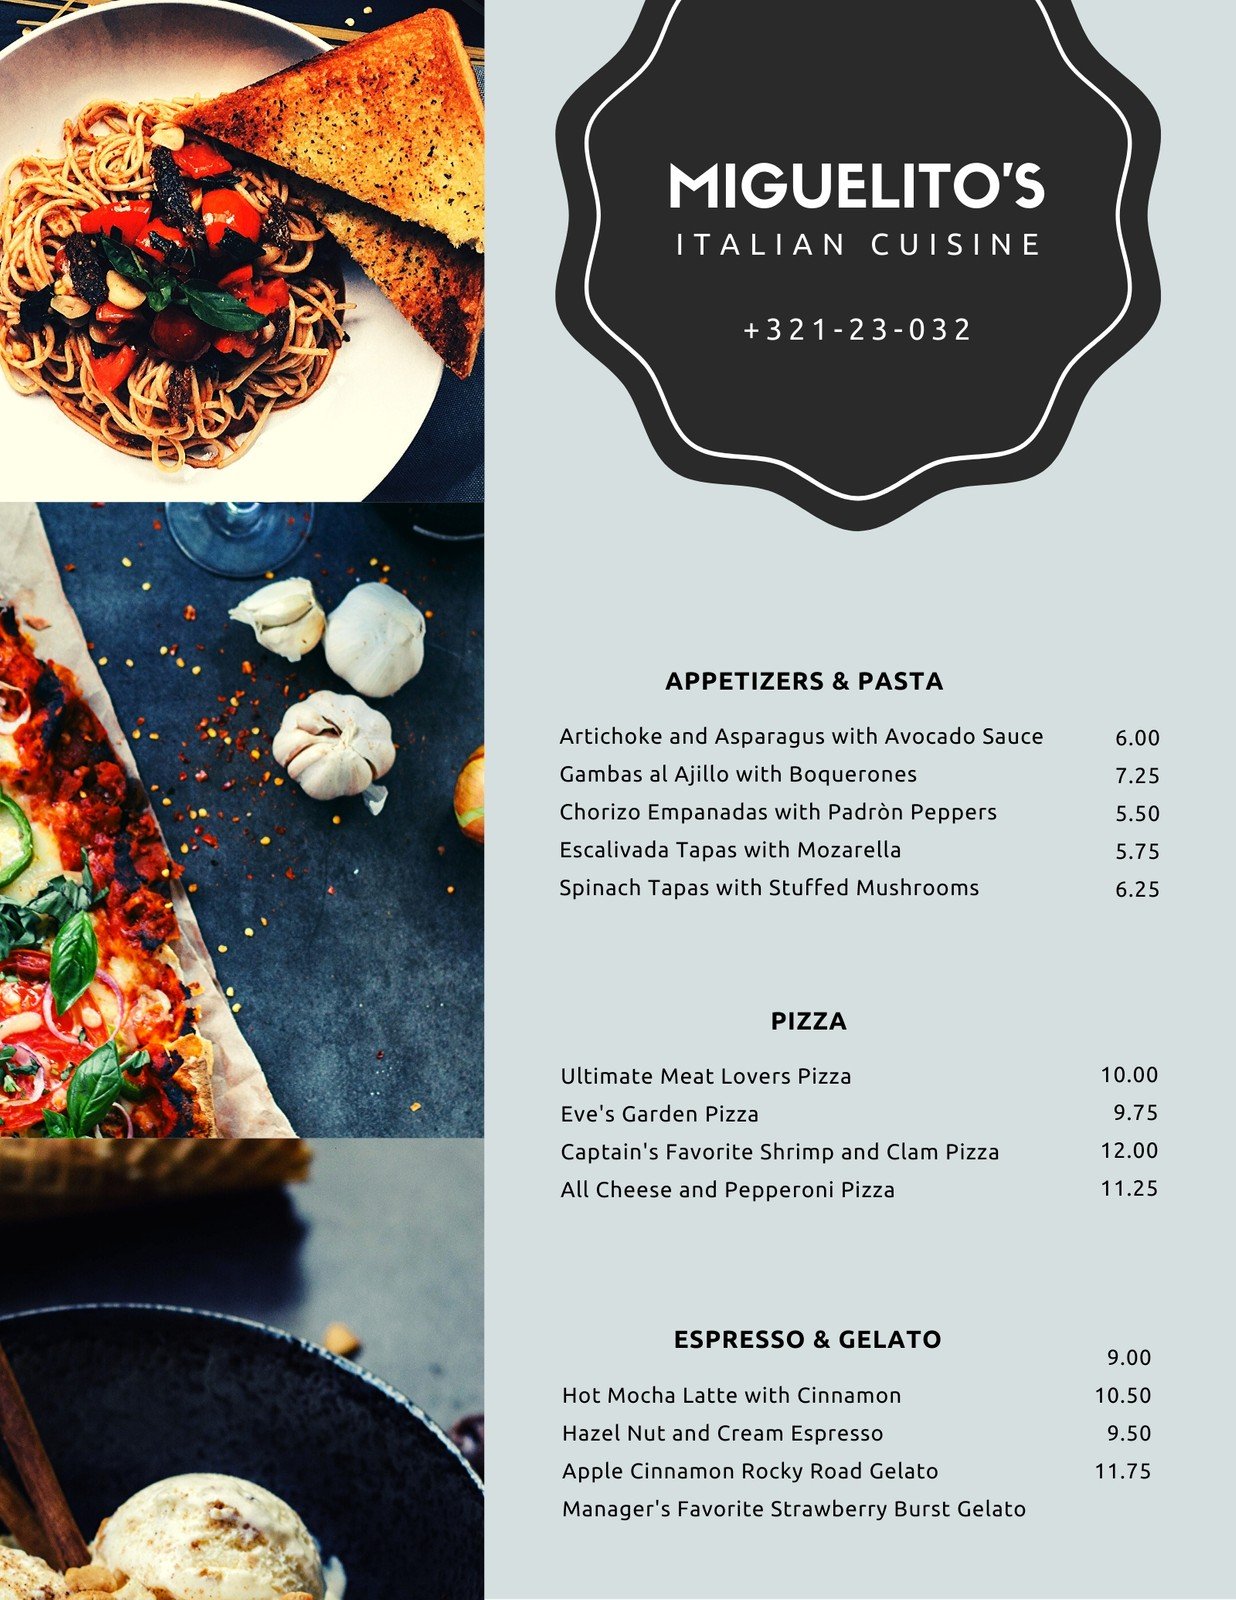 Free Printable And Customizable Pizza Menu Templates Canva